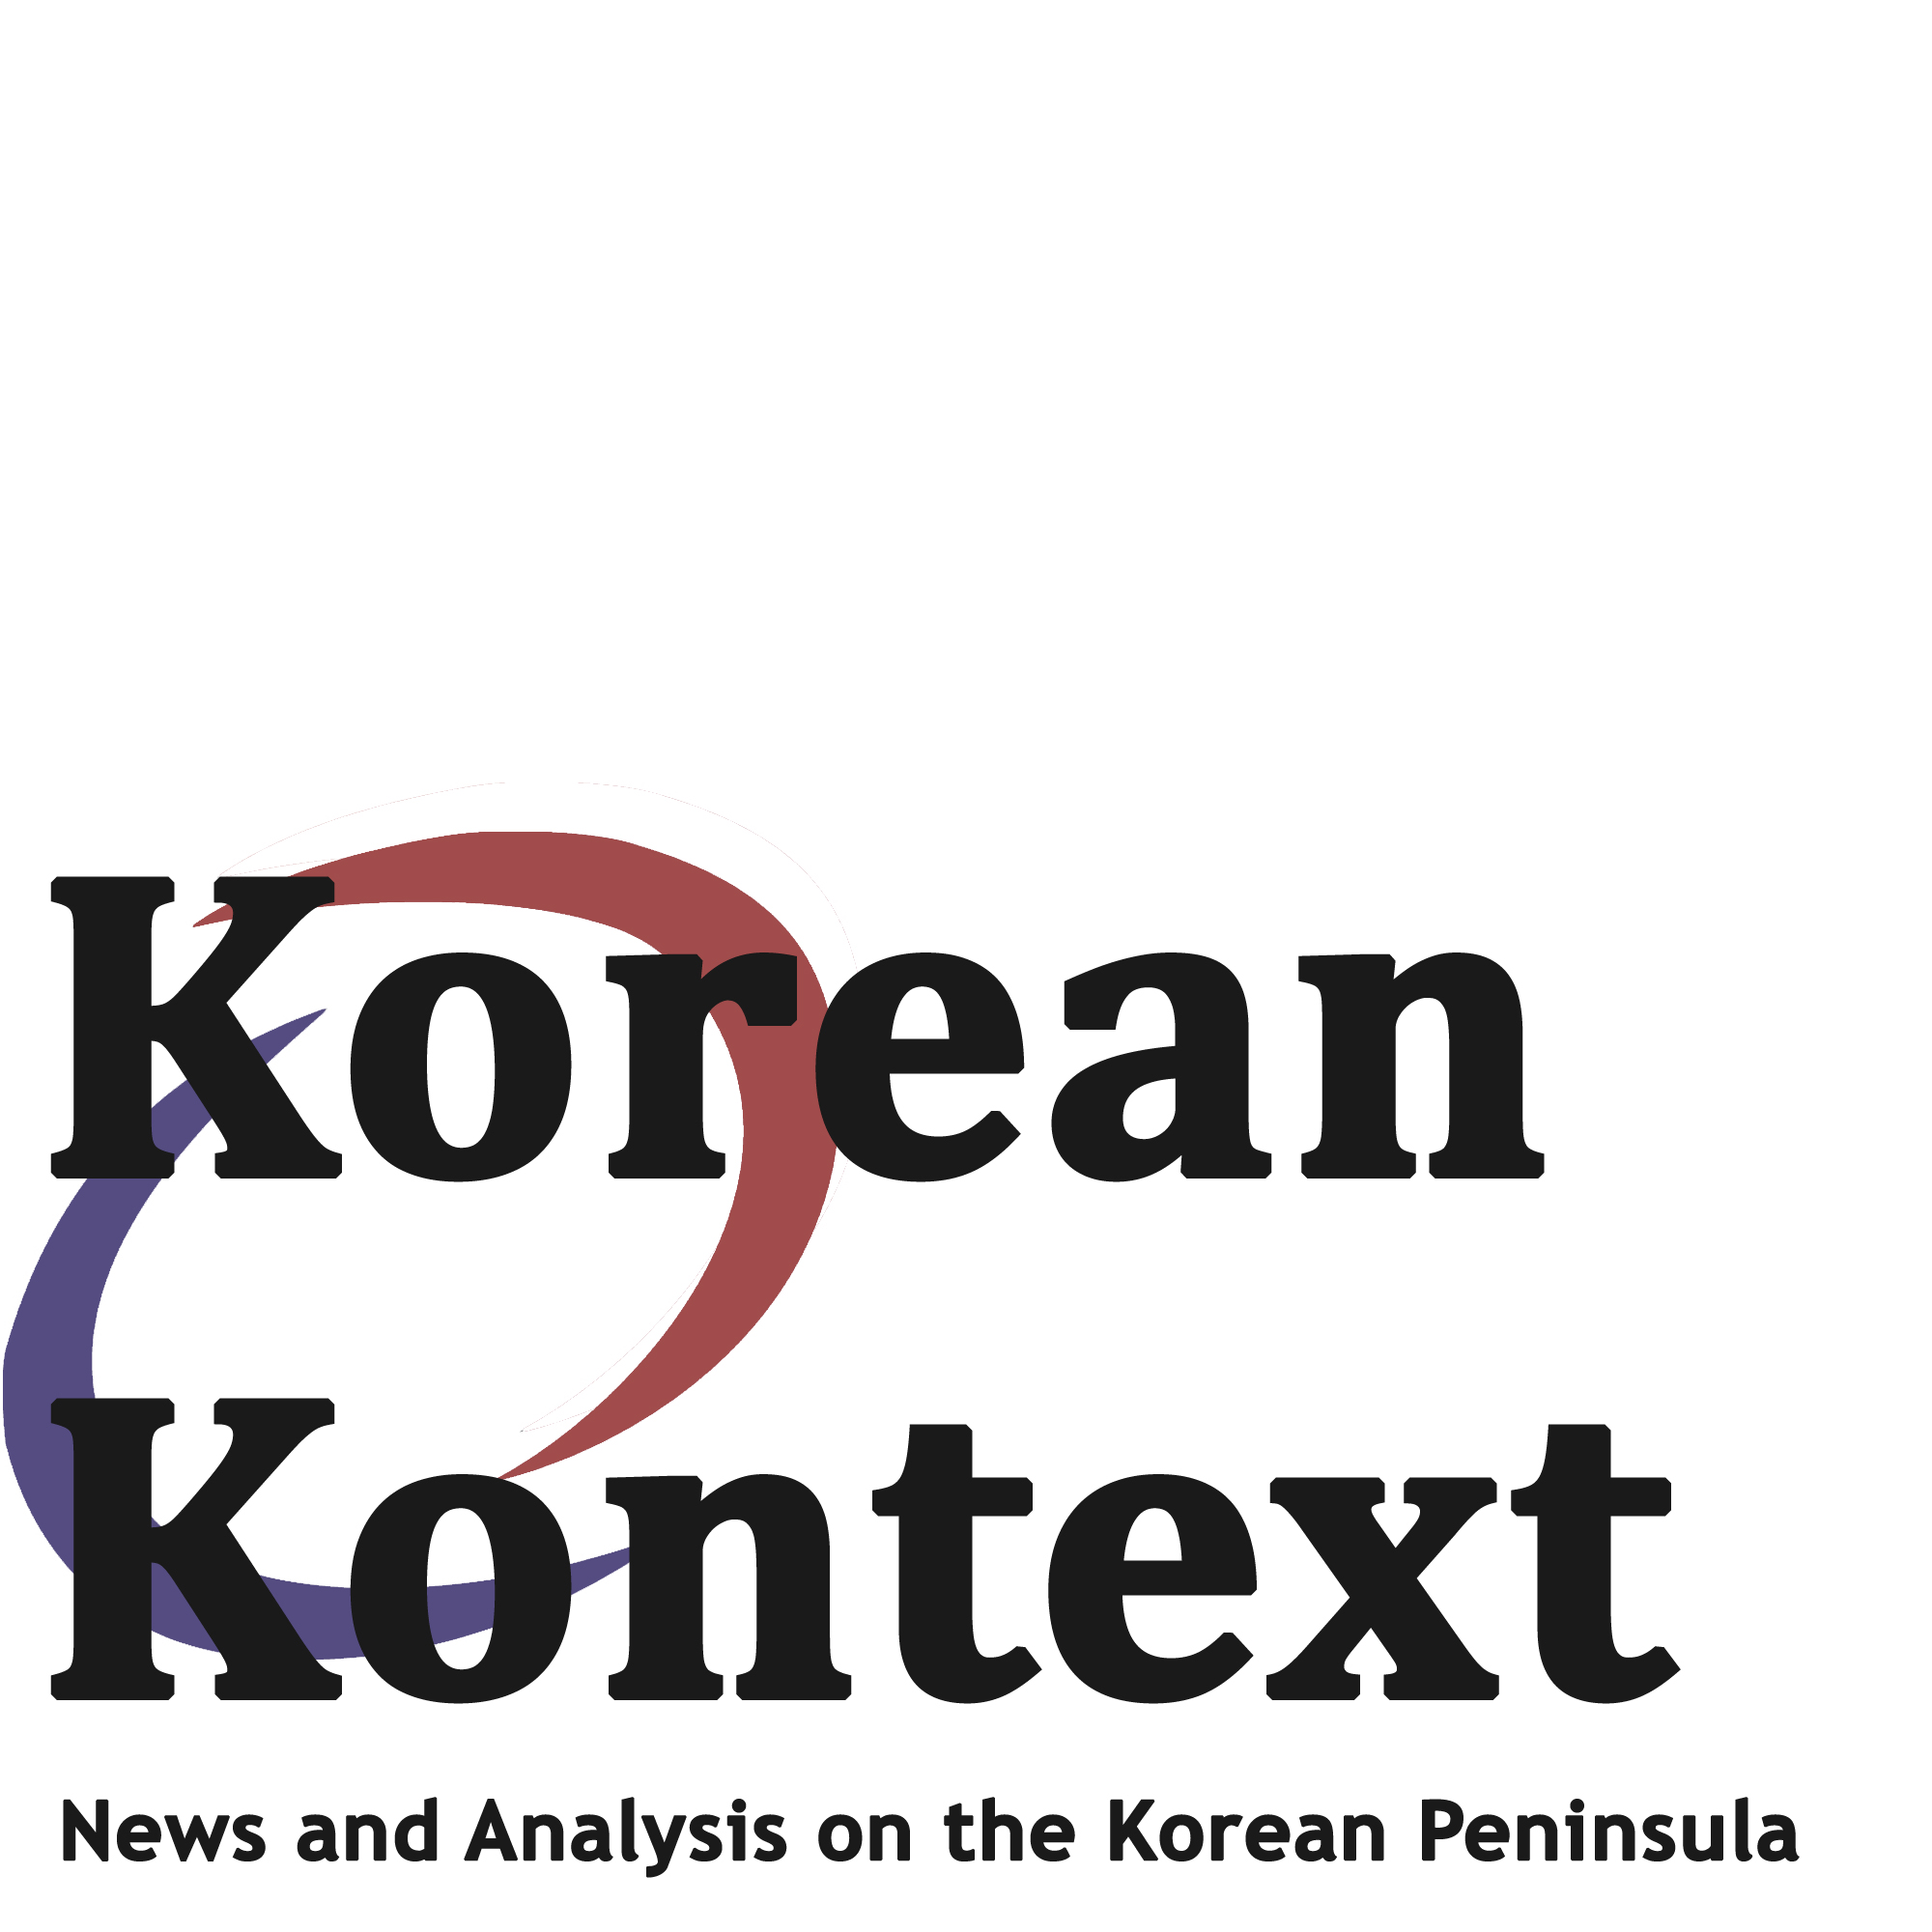 Korean American Day 2018: Photojournalist Chang Lee